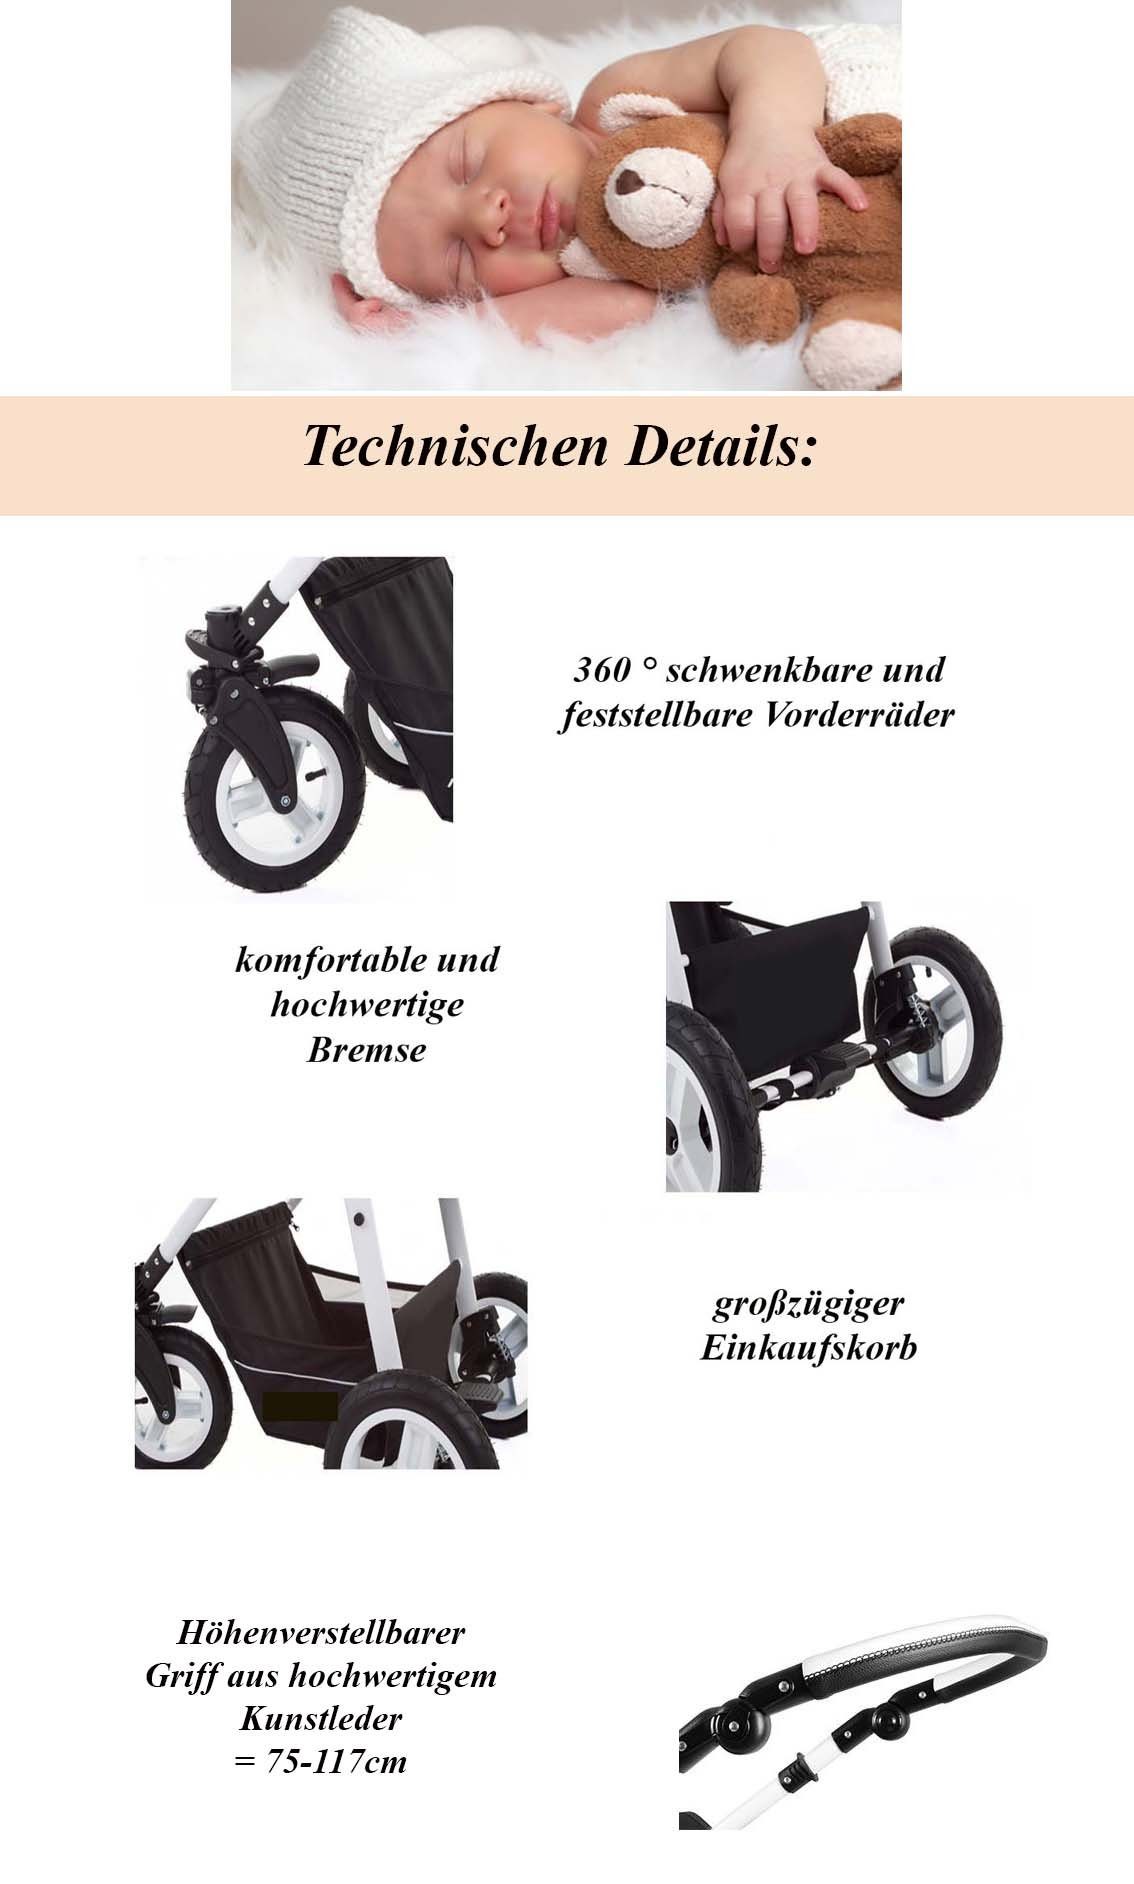 ECO babies-on-wheels 16 Kombi-Kinderwagen in Kunstleder 1 - Farben Kinderwagen-Set in Cosmo 29 - 3 Hellgrau-Rosa Teile